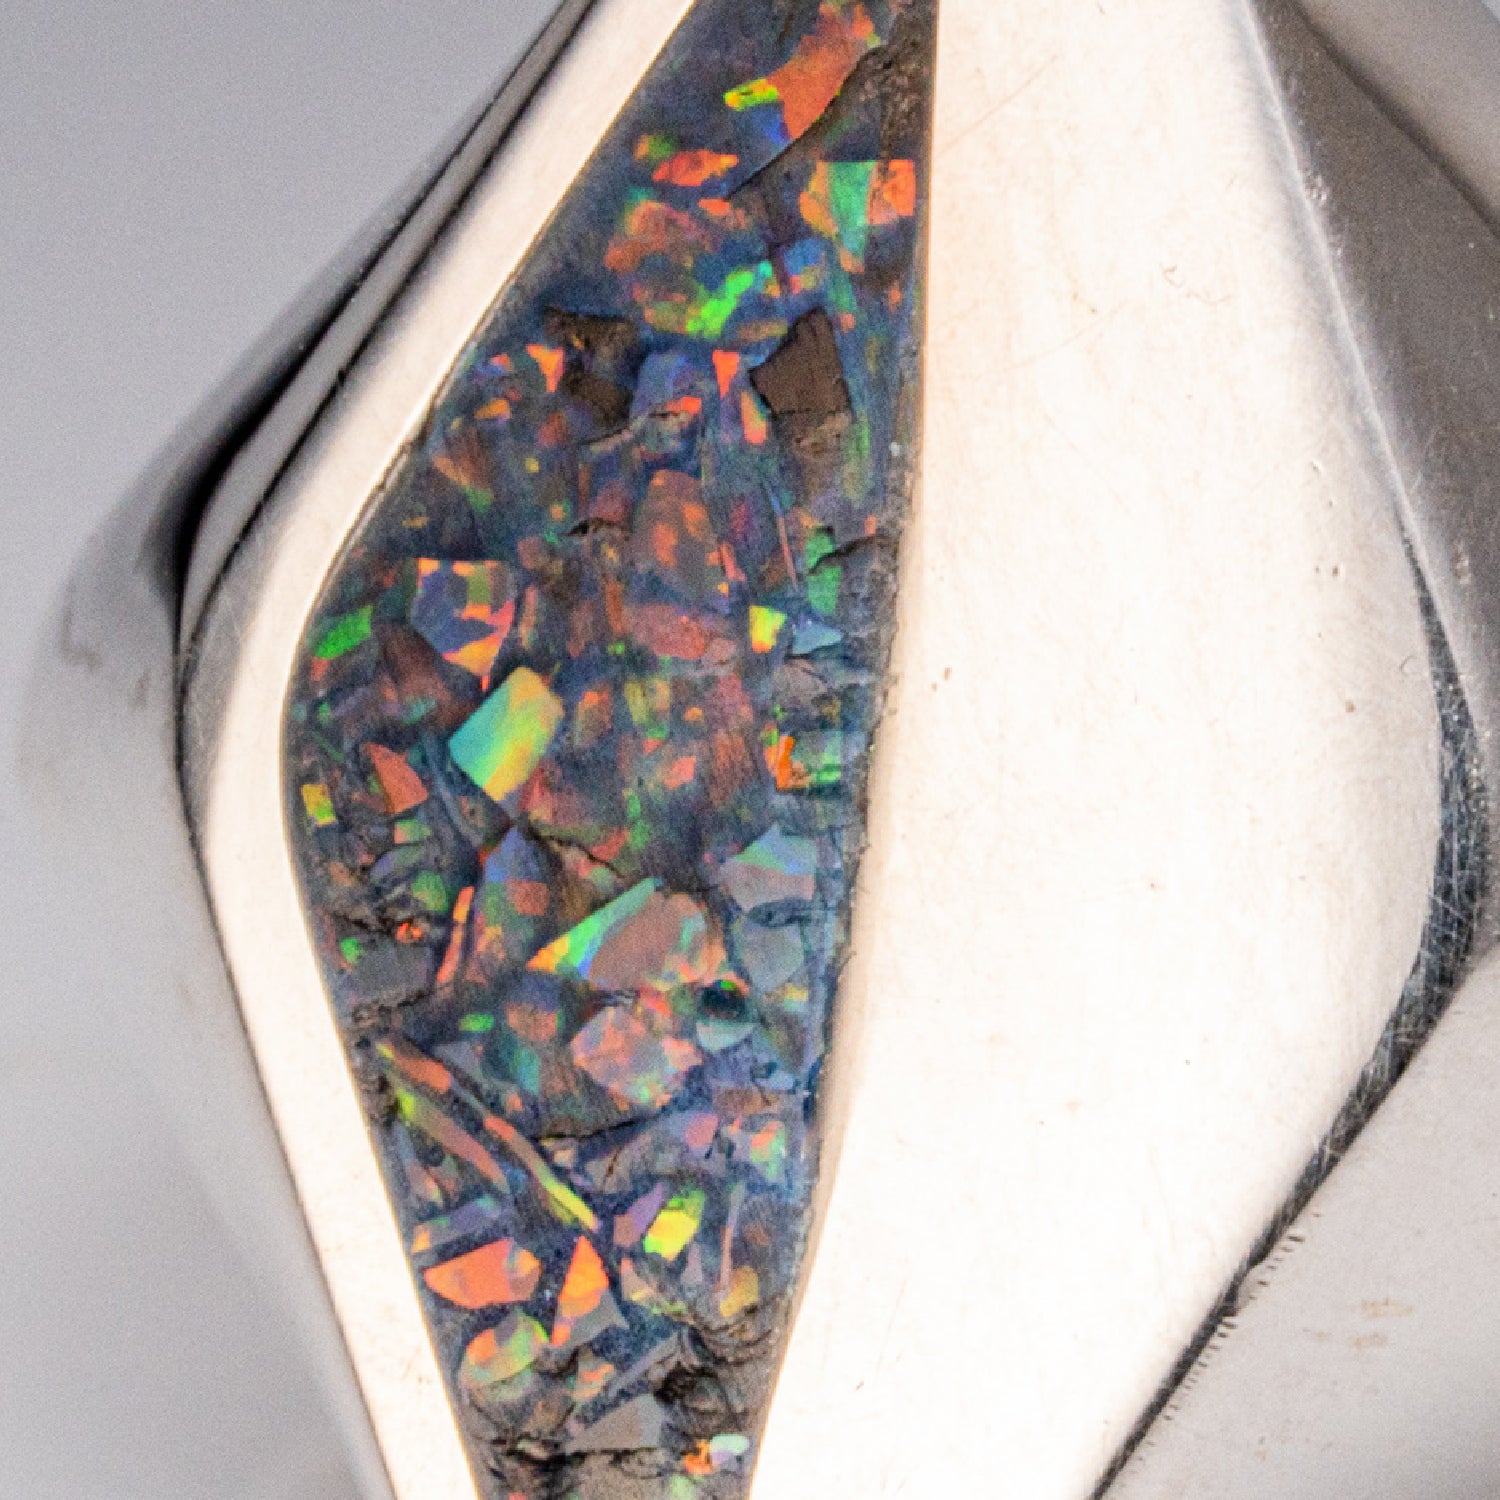 Genuine Opal Sterling Silver Men's Ring (Size 10)